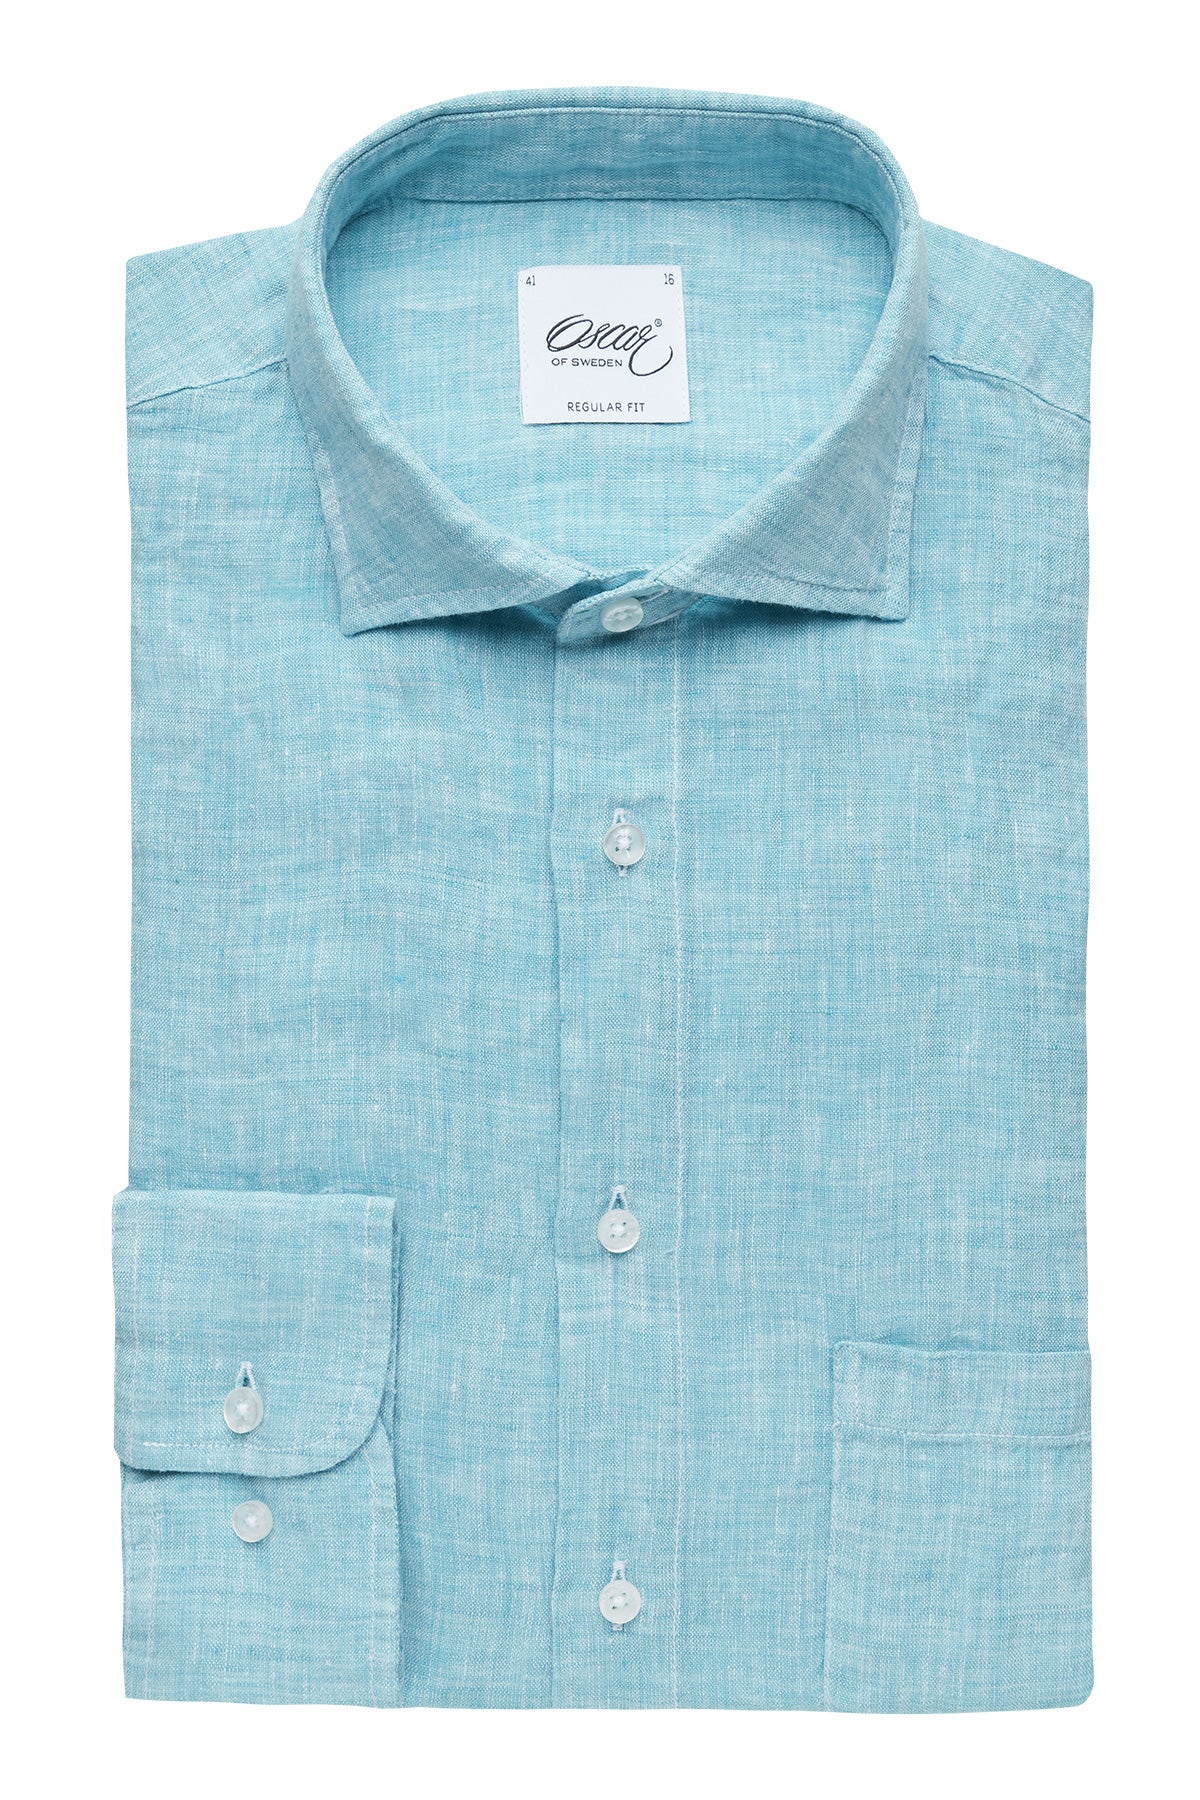 Turquoise regular fit linen shirt